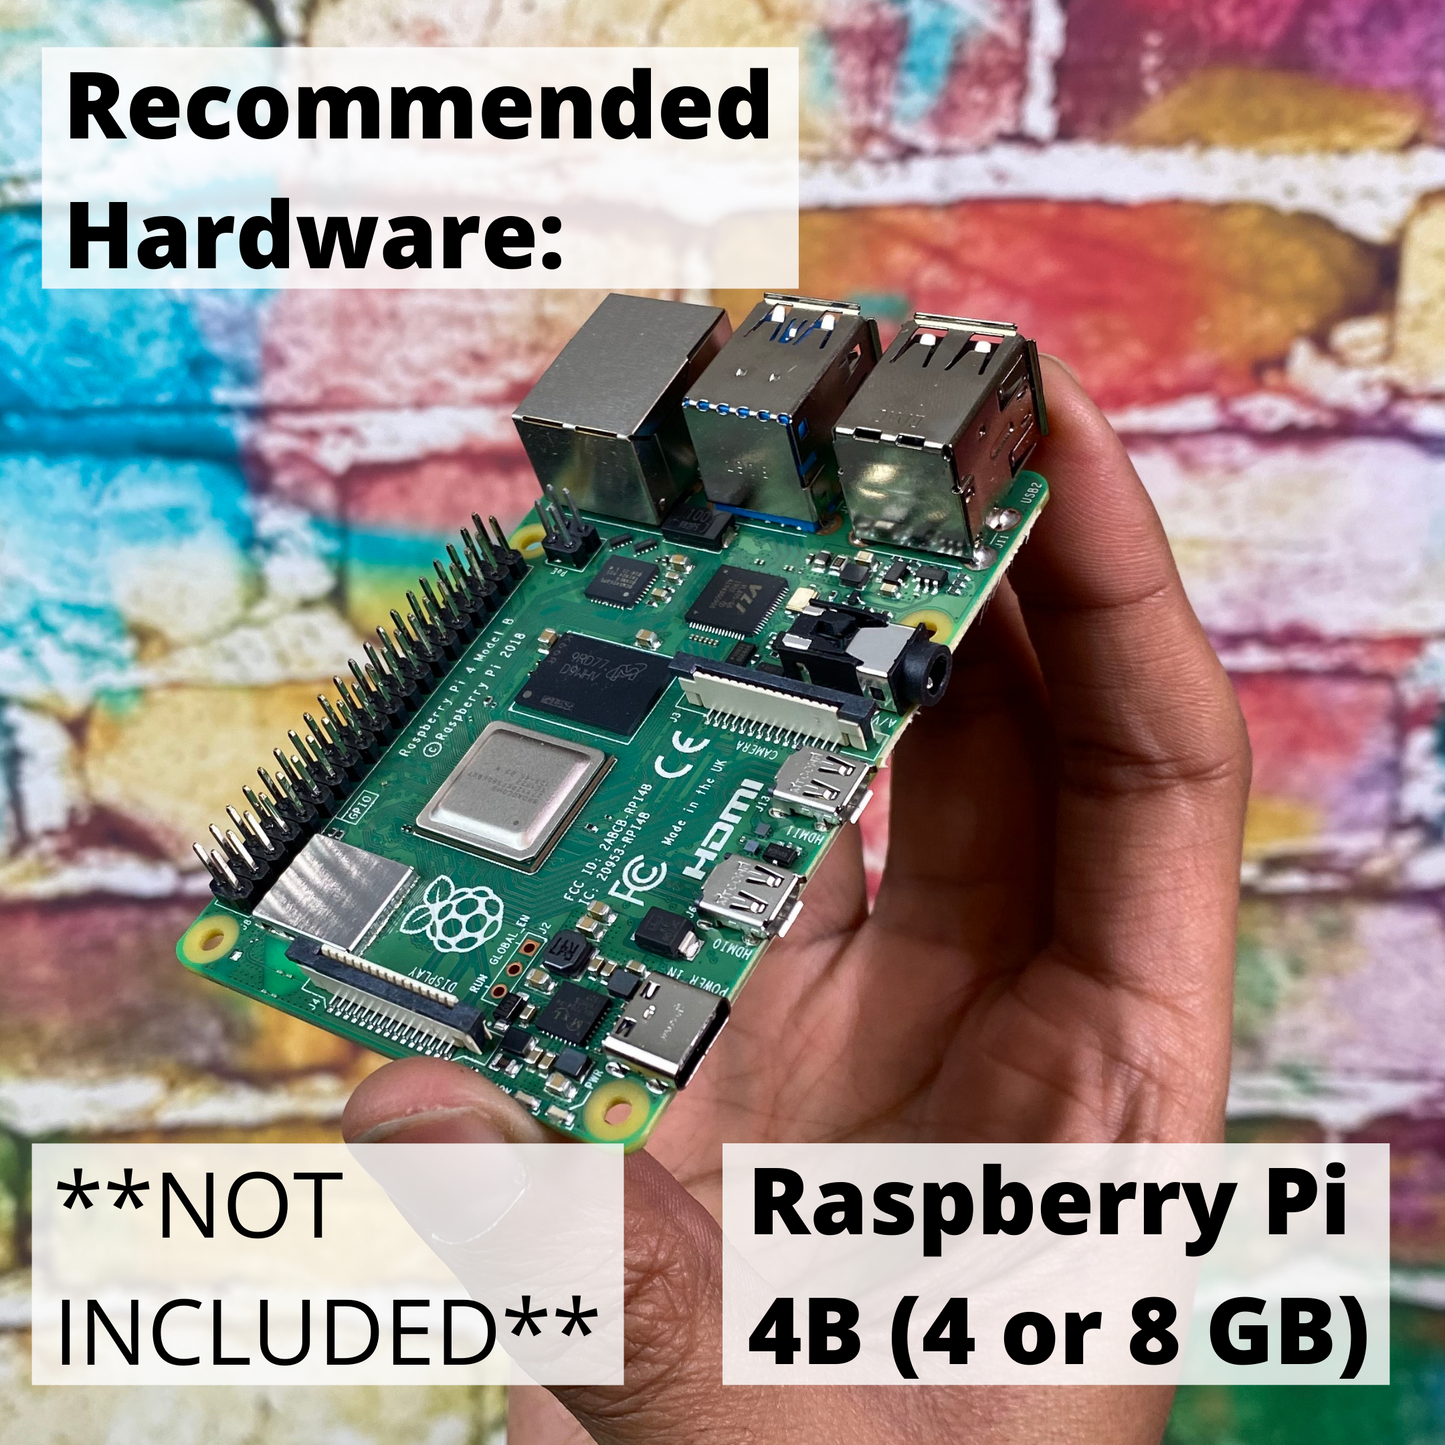 Pi'd Tinkerer DIY Hybrid Cloud DevSecOps Workshop for Raspberry Pi 4B (Workshop Only – Hardware NOT Included) - notiaPoint, Inc.